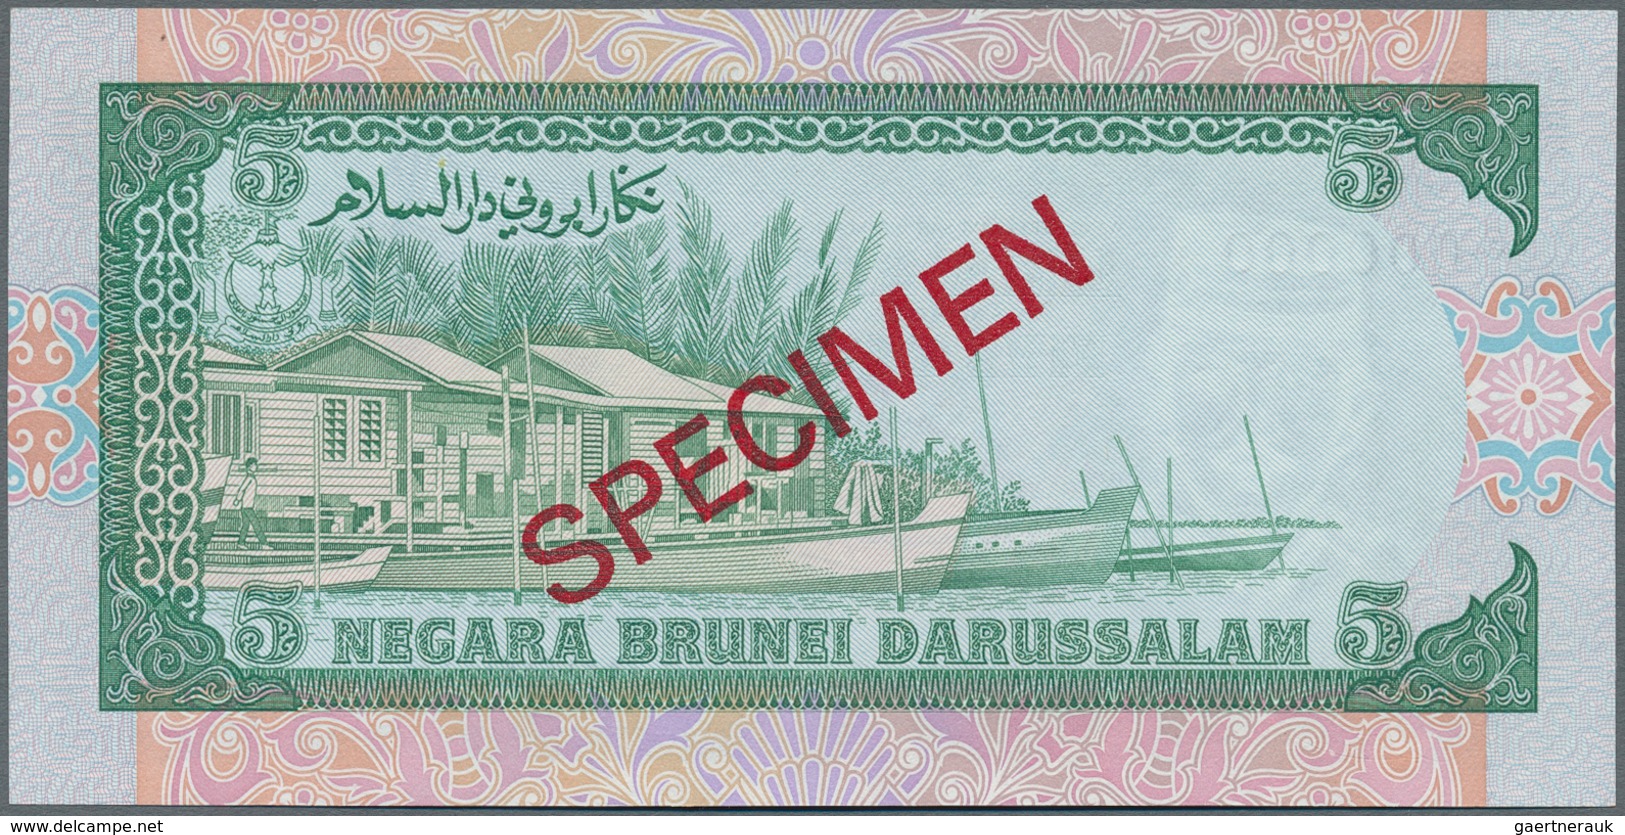 Brunei: Negara Brunei Darussalam / State of Brunei Darussalam extraordinary rare SPECIMEN set with 1